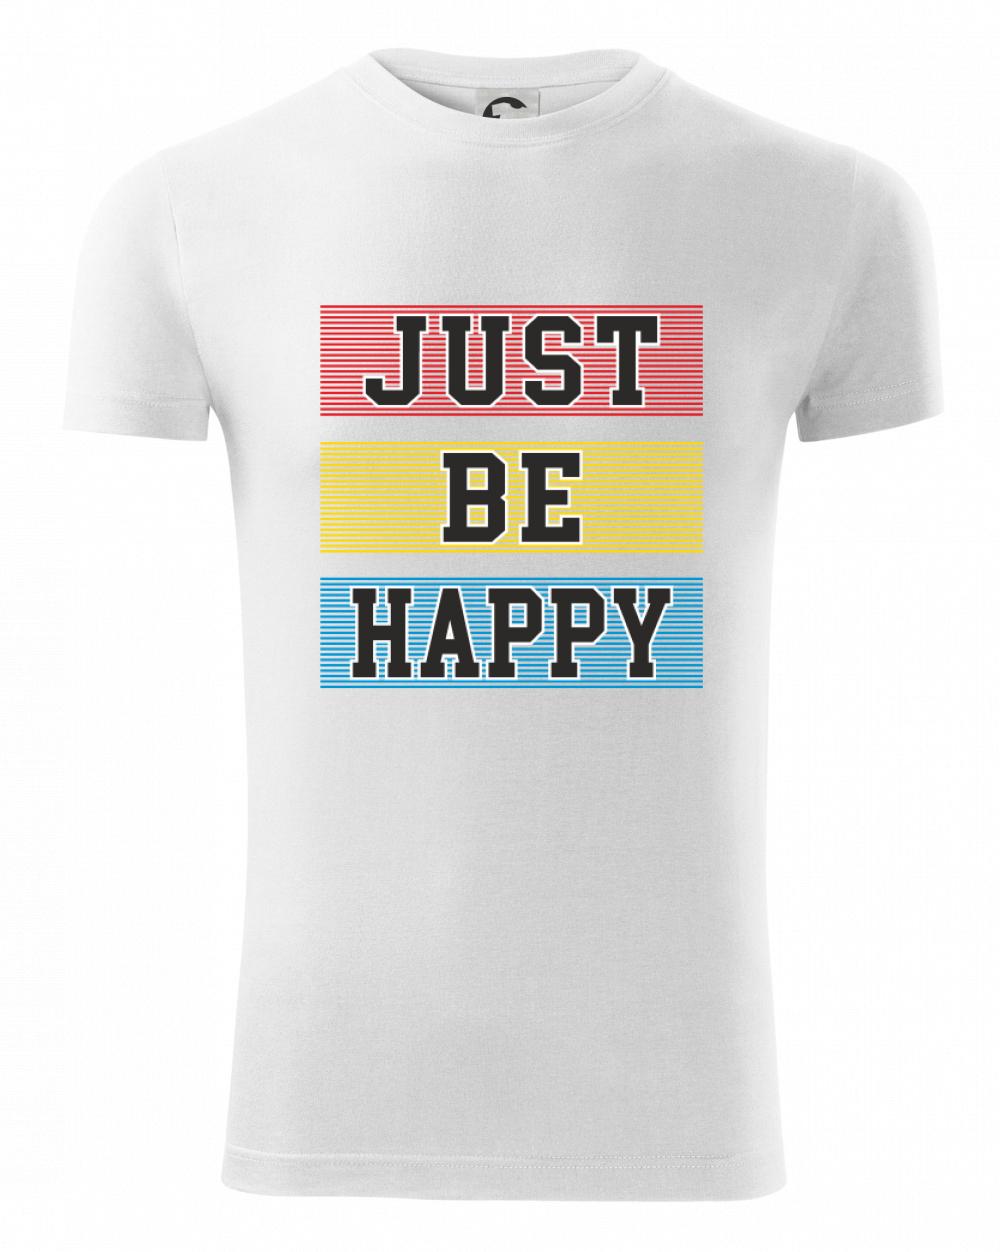 Just be happy - Viper FIT pánské triko